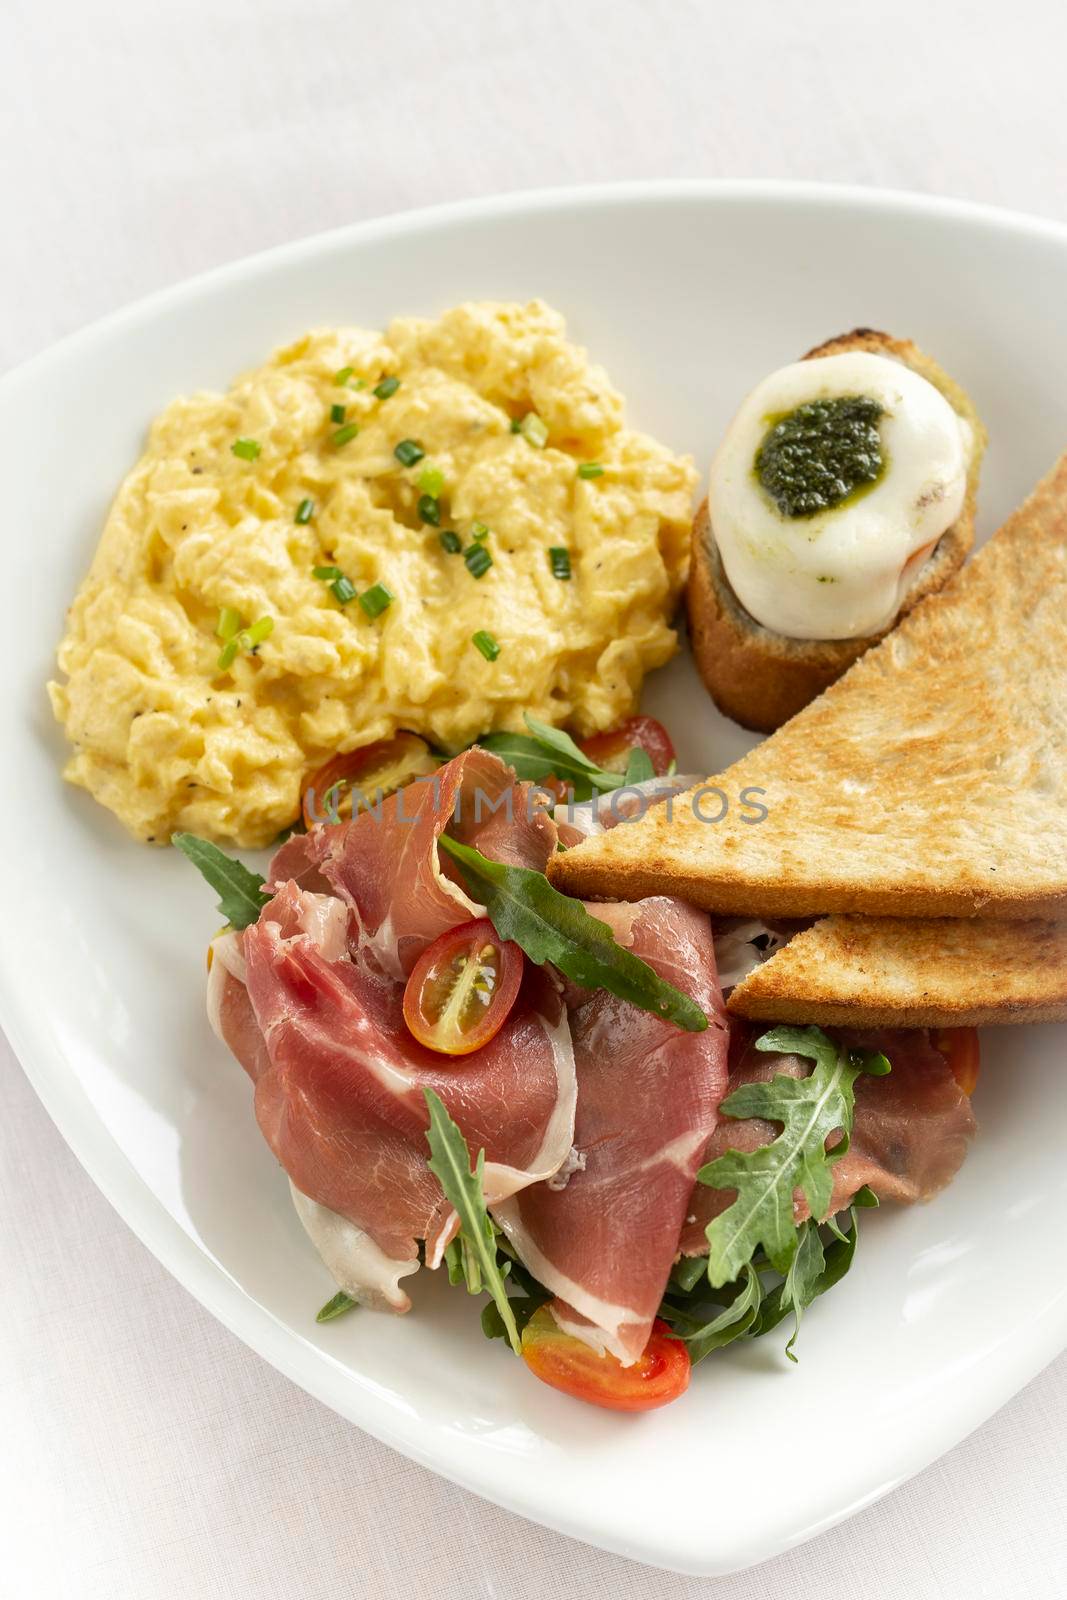 smoked jamon serrano ham and scrambled eggs gourmet breakfast in barcelona spain restaurant